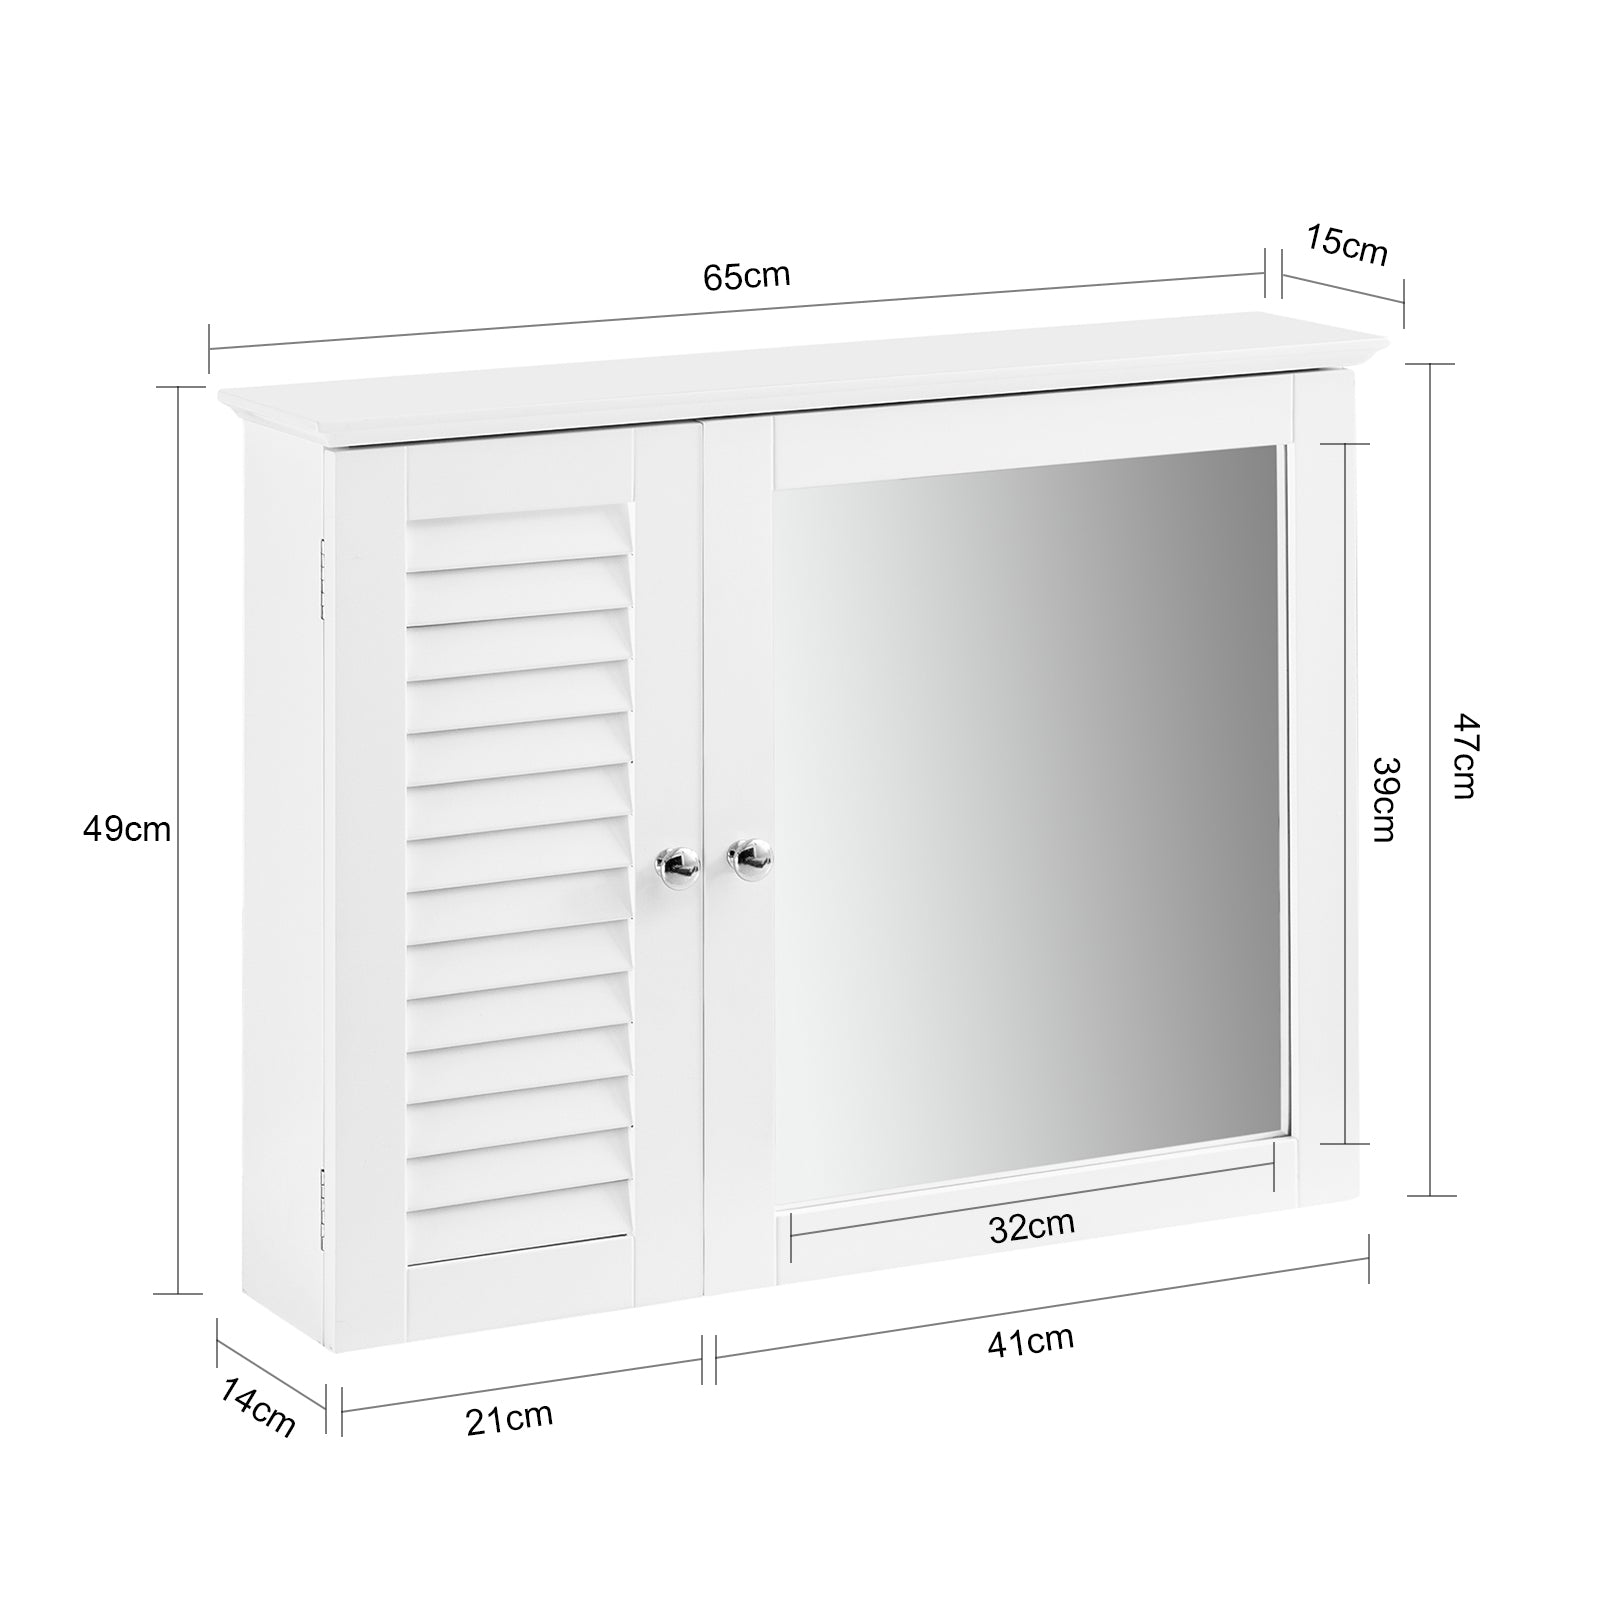 SoBuy BZR55-W, Bathroom Wall Mirror Cabinet, Wall Mounted Bathroom Cabinet, Mirrored Storage Cabinet Unit, White